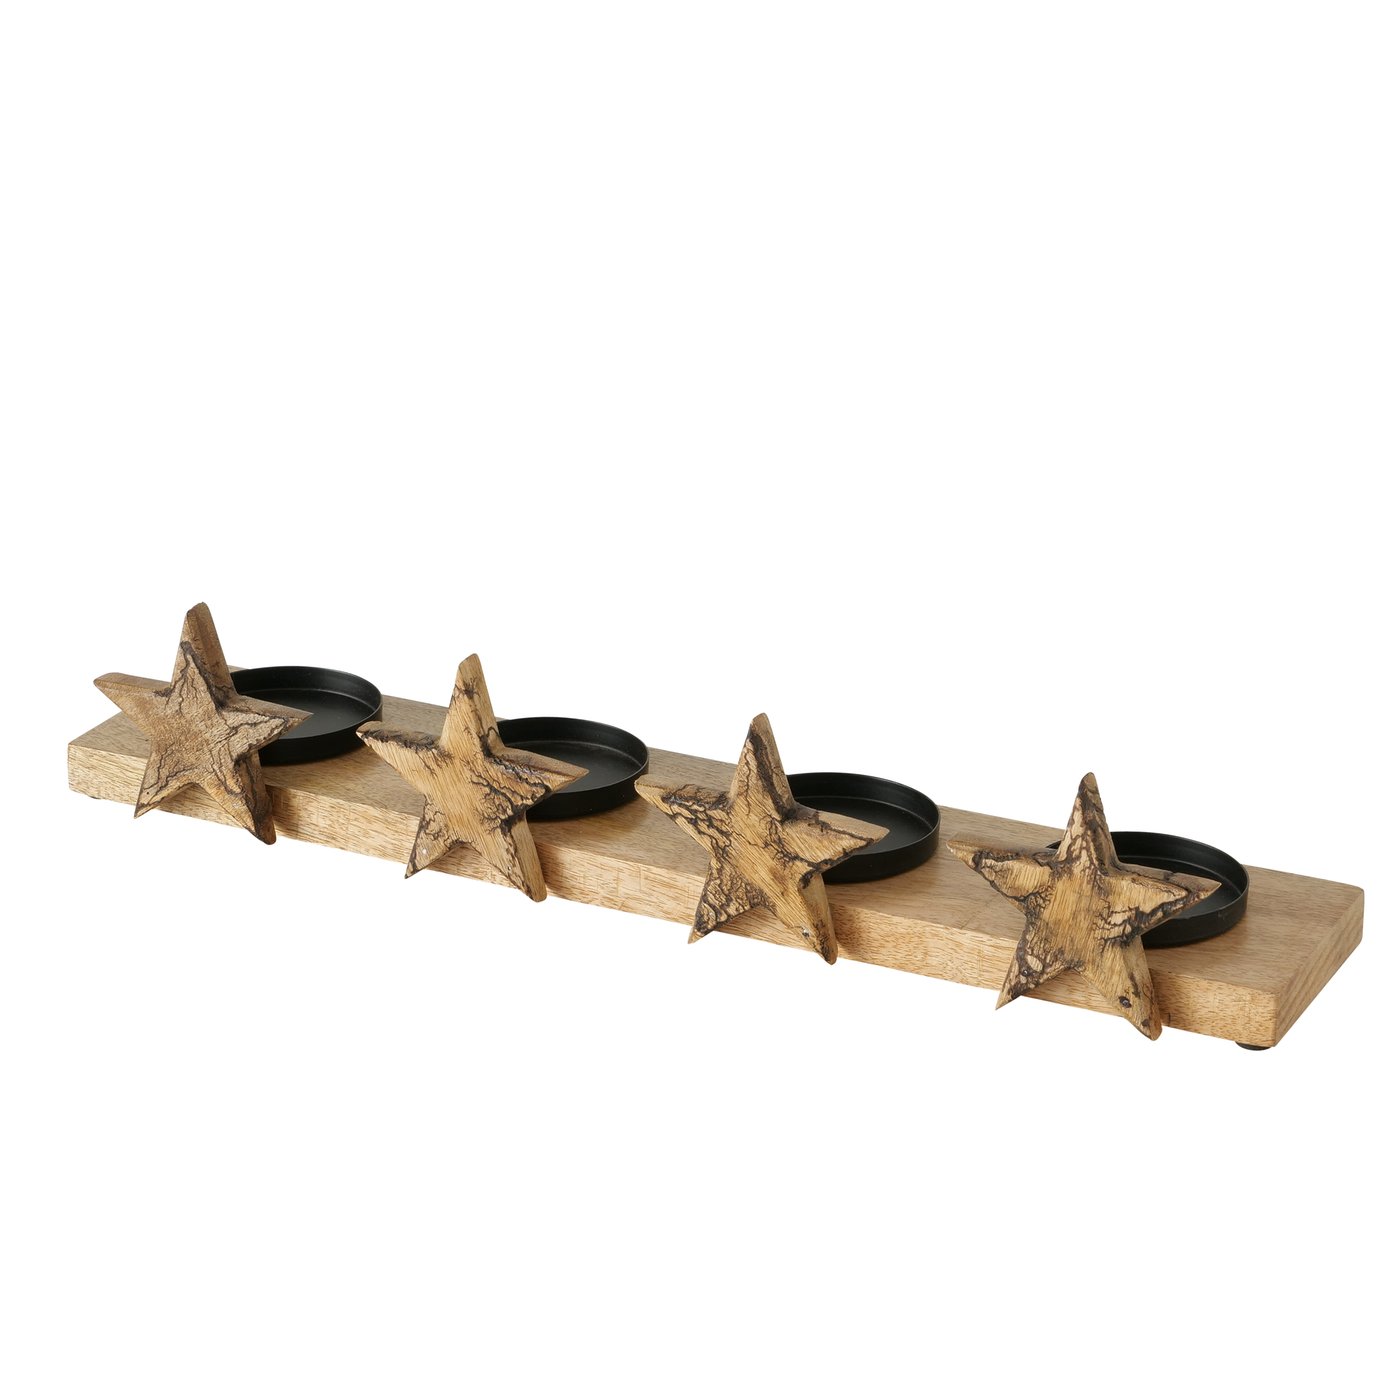 Holz Kerzentablett mit 4 Kerzenhaltern und Stern, 2013382, 4020607909540, Kerzenständer, Adventstablett,